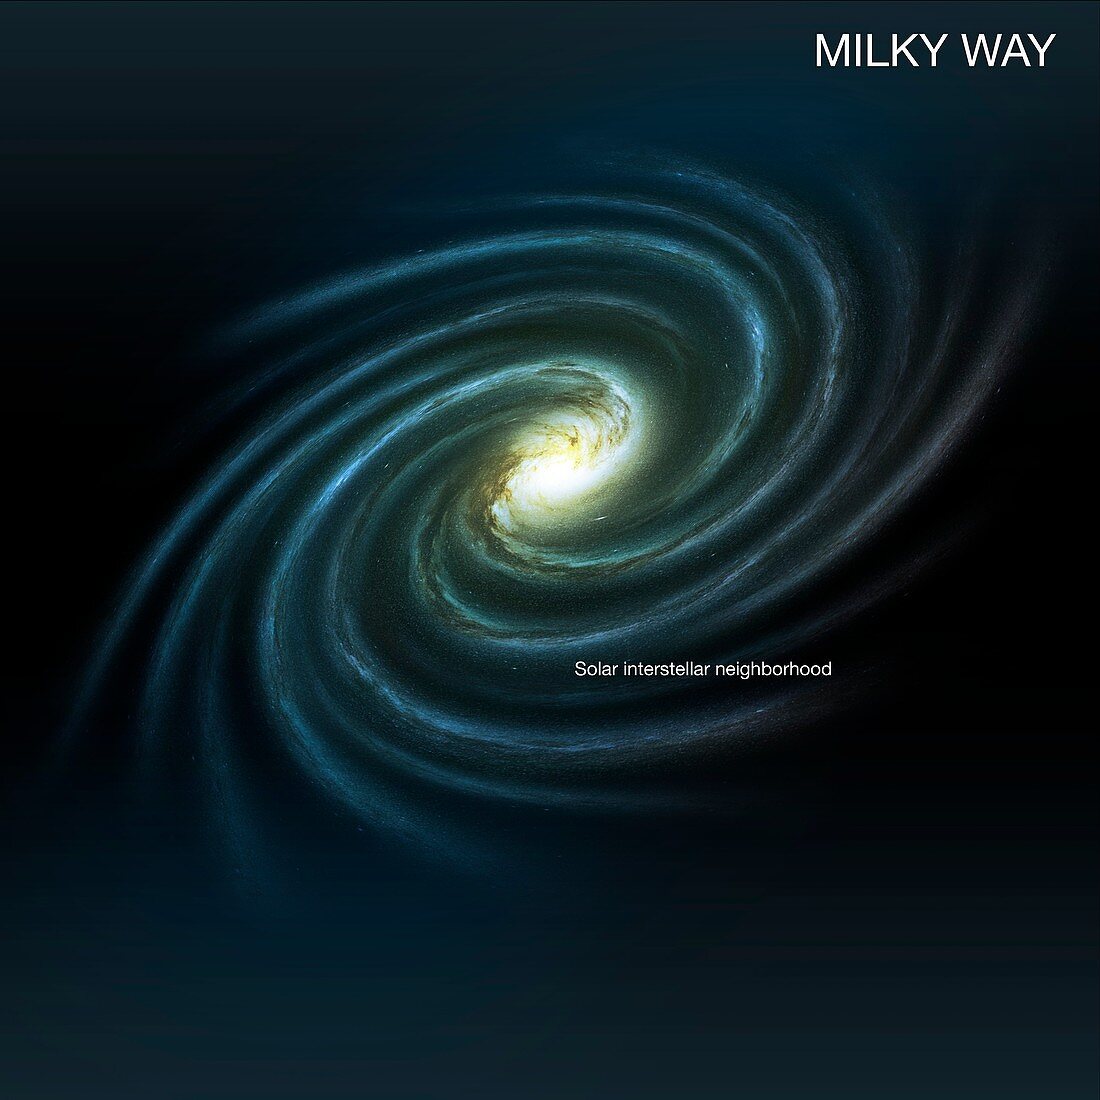 Sun's location in the Milky Way, illustration